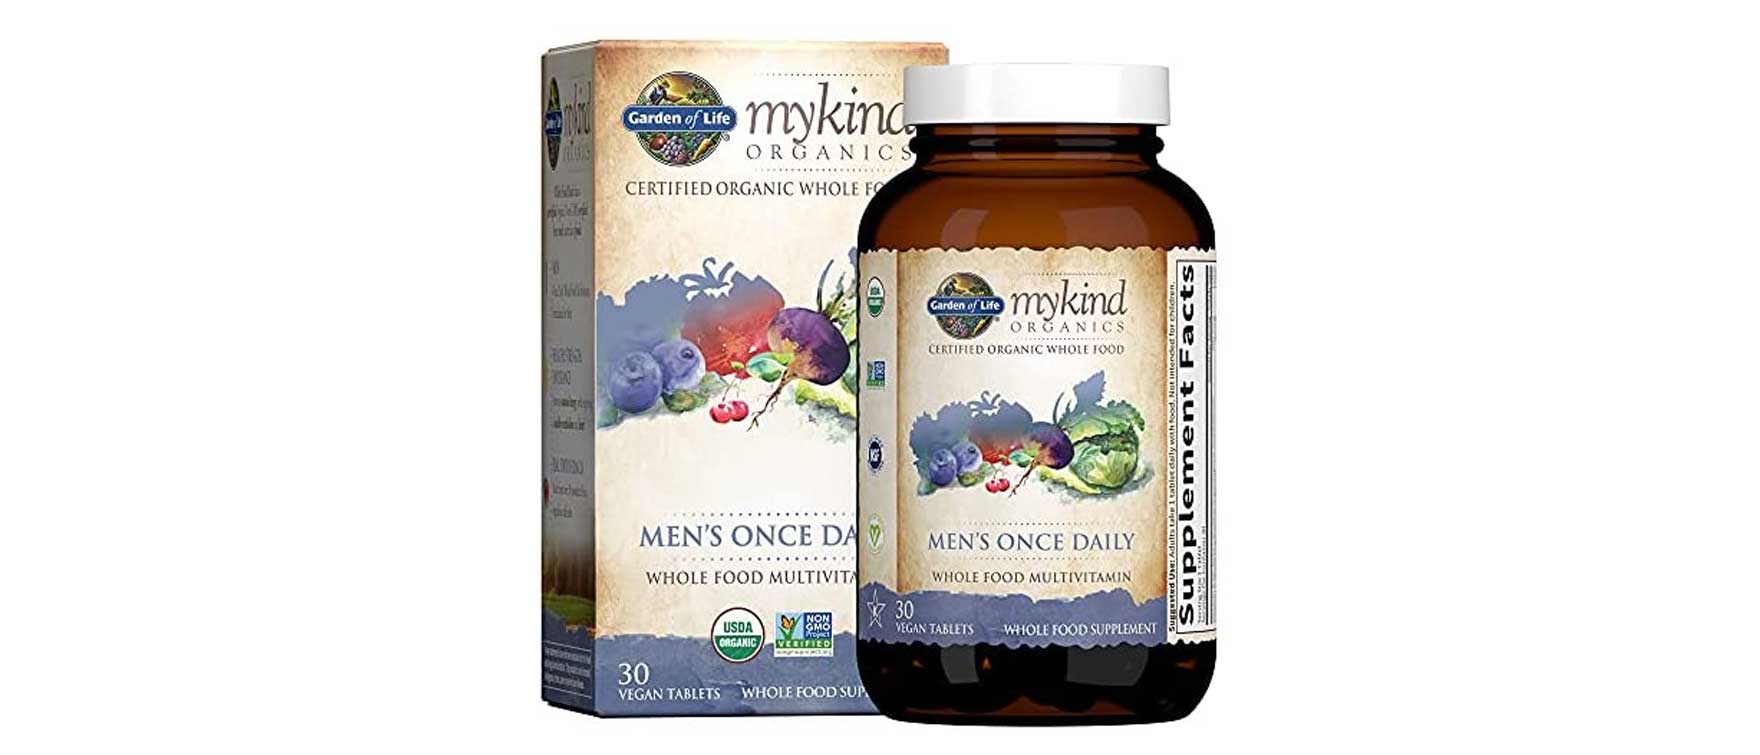 2. Garden of Life mykind Organics Men's Once Daily Multivitamin